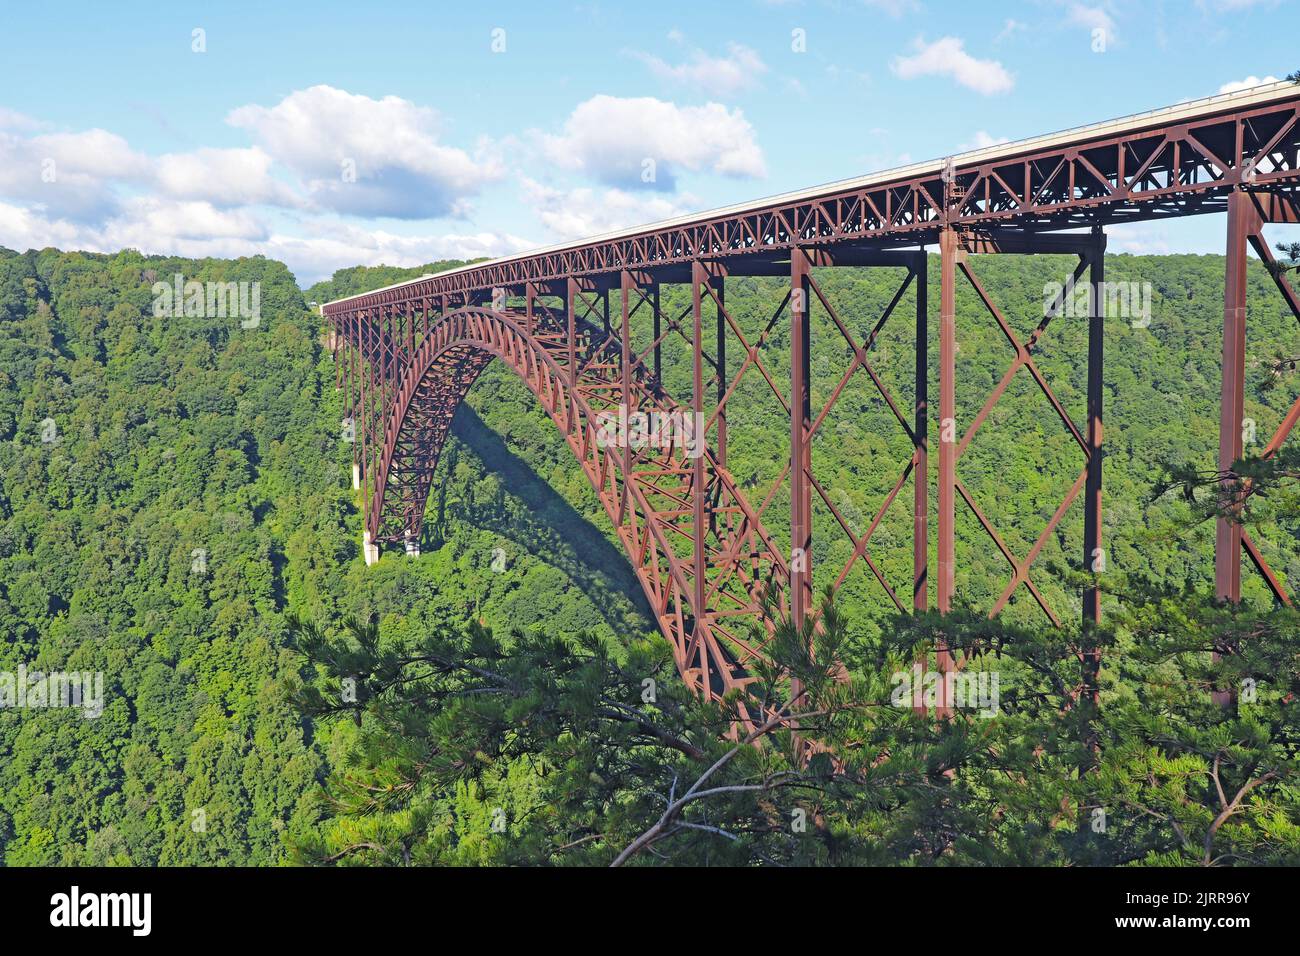 Vista del puente New River Gorge en la ruta US 19 cerca de Fayetteville, Virginia Occidental Foto de stock